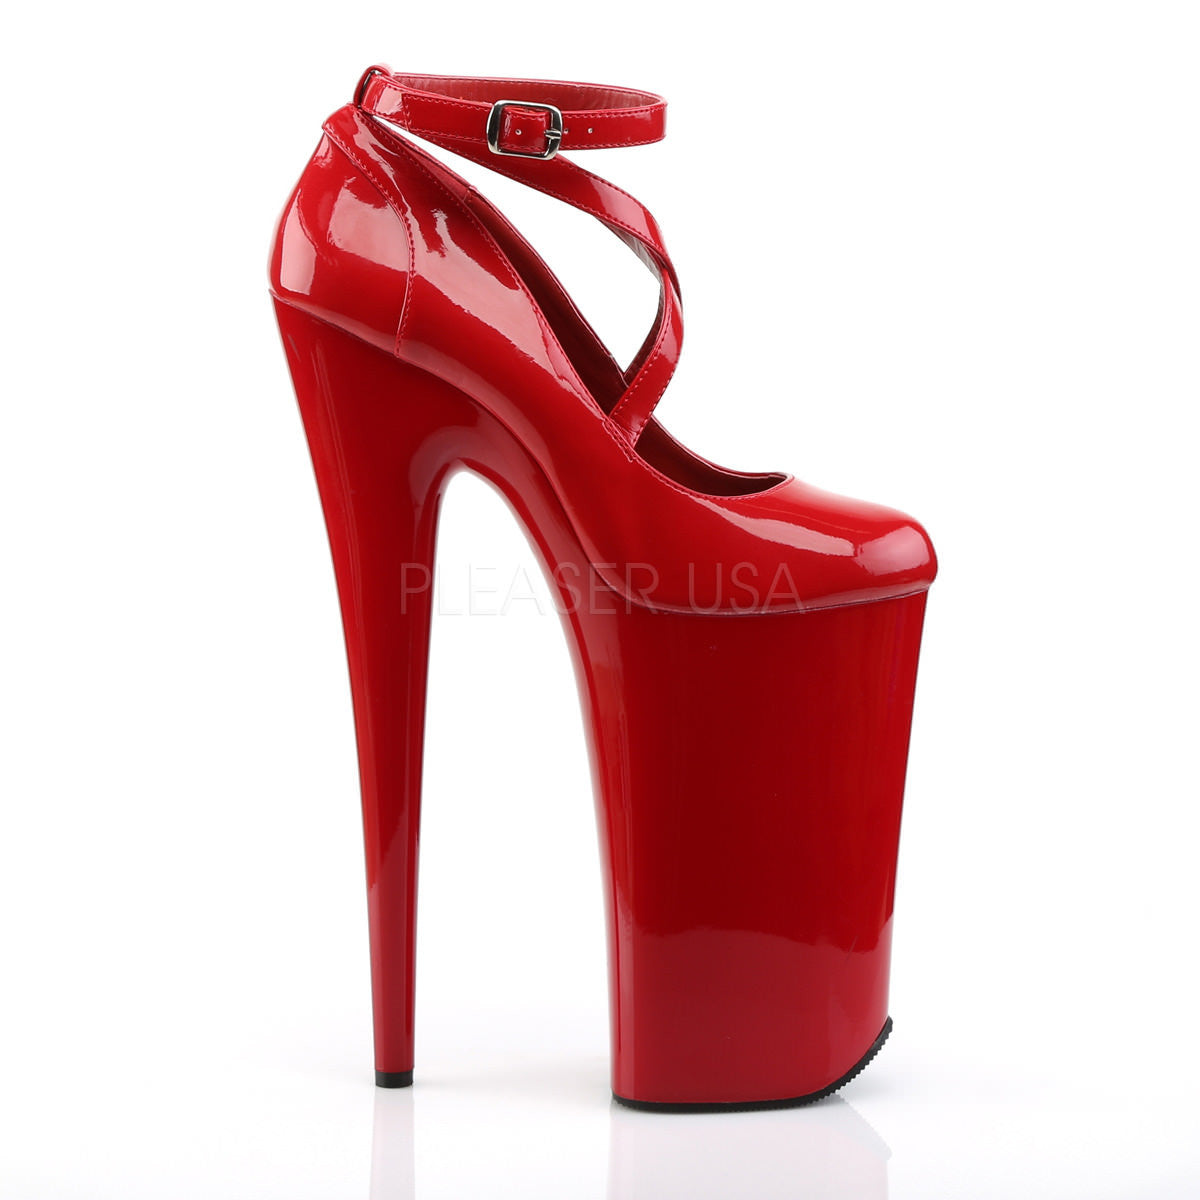 10 Inch Heel BEYOND-087 Red Patent